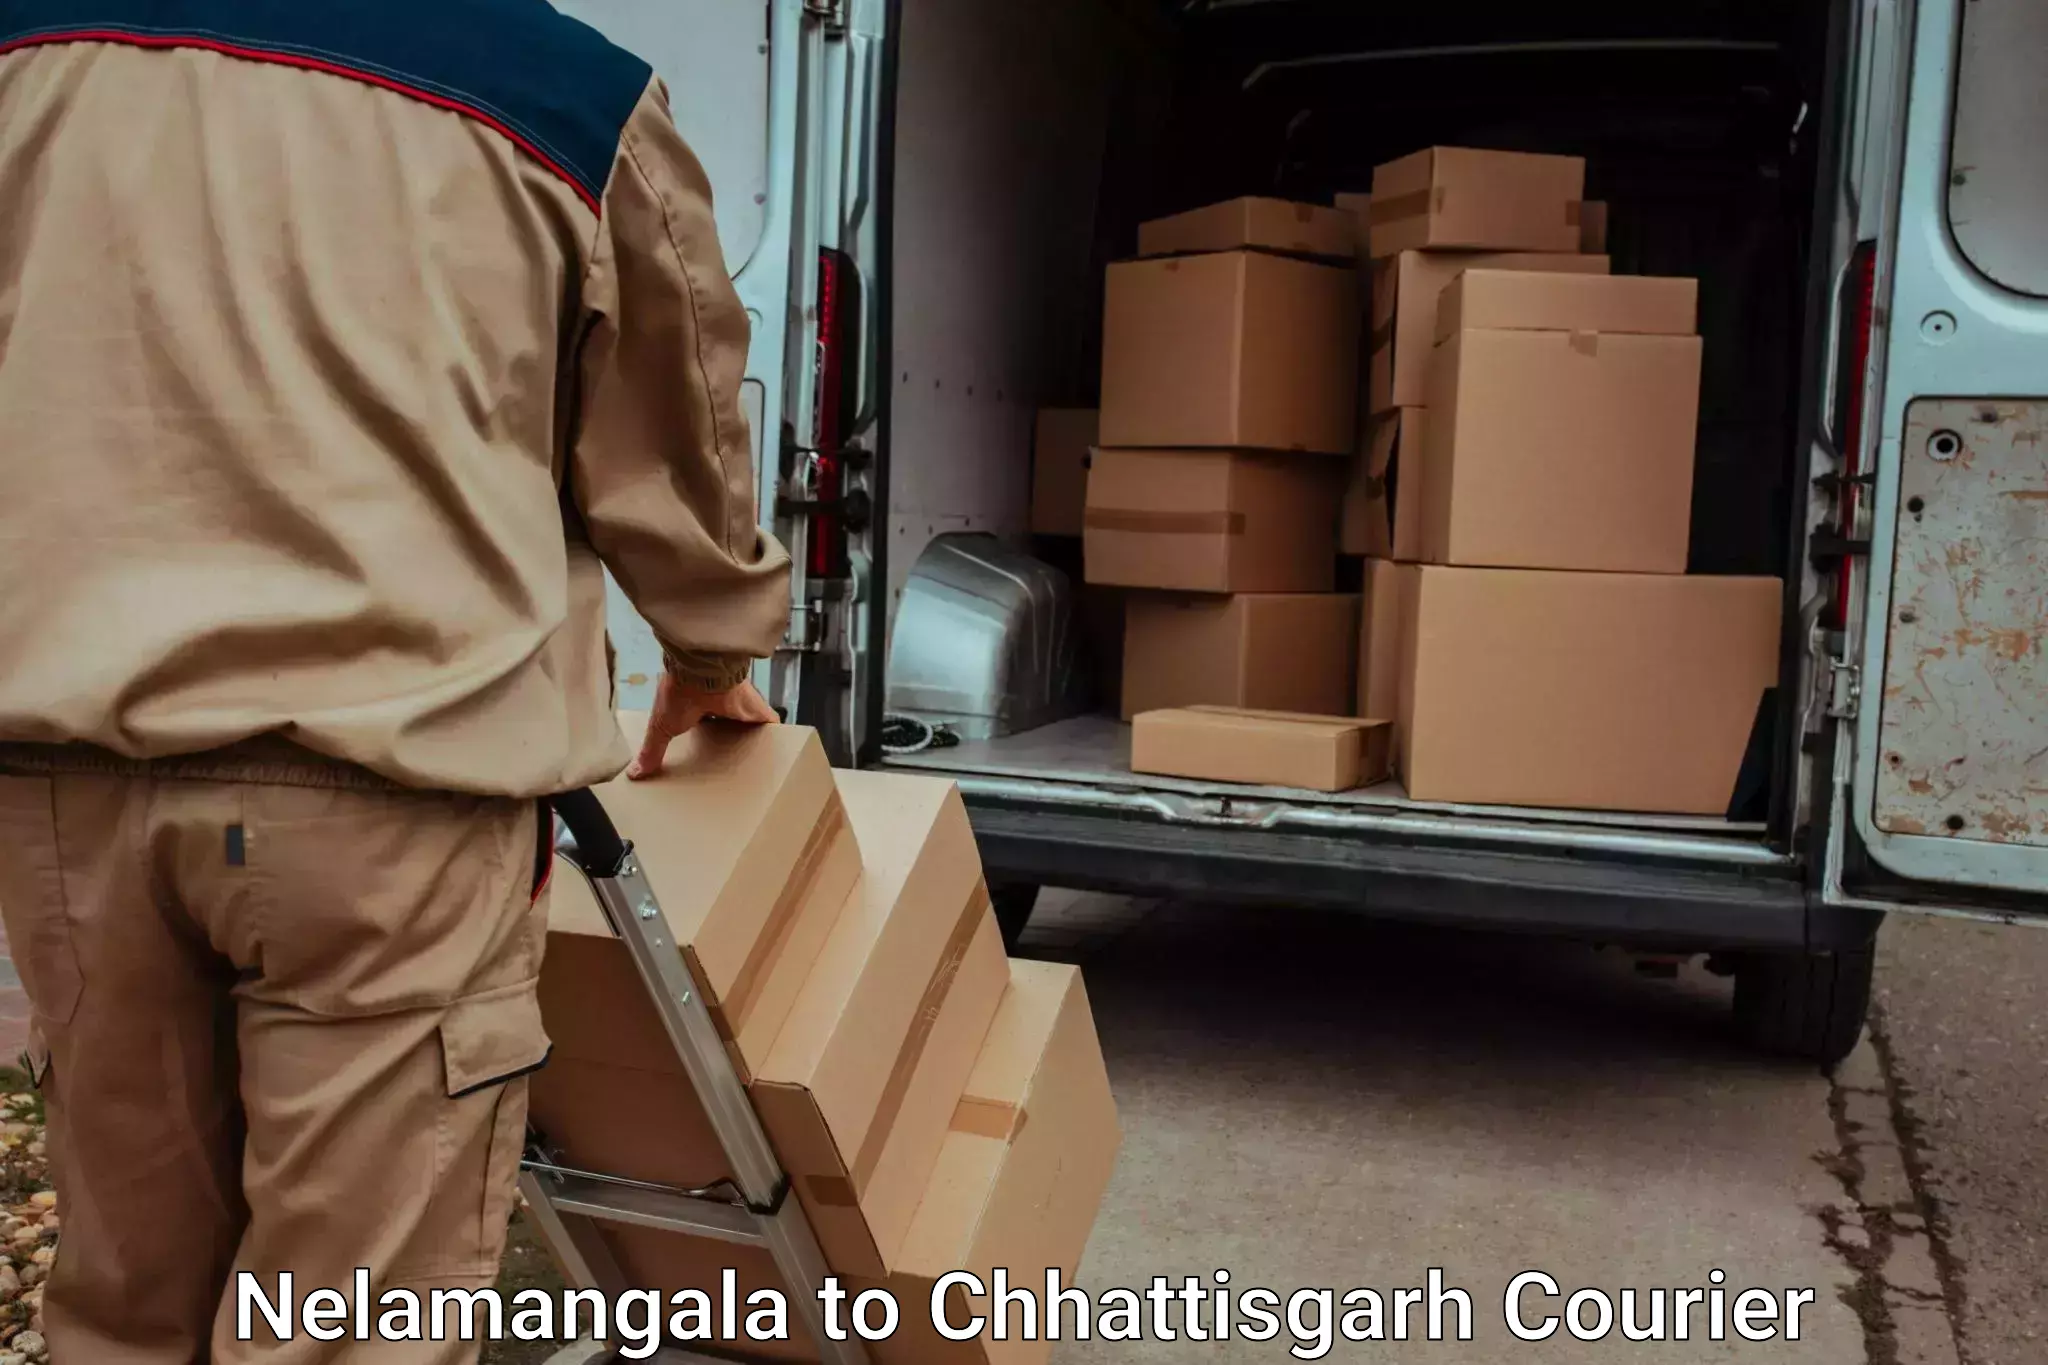 Trusted furniture movers in Nelamangala to Chhattisgarh